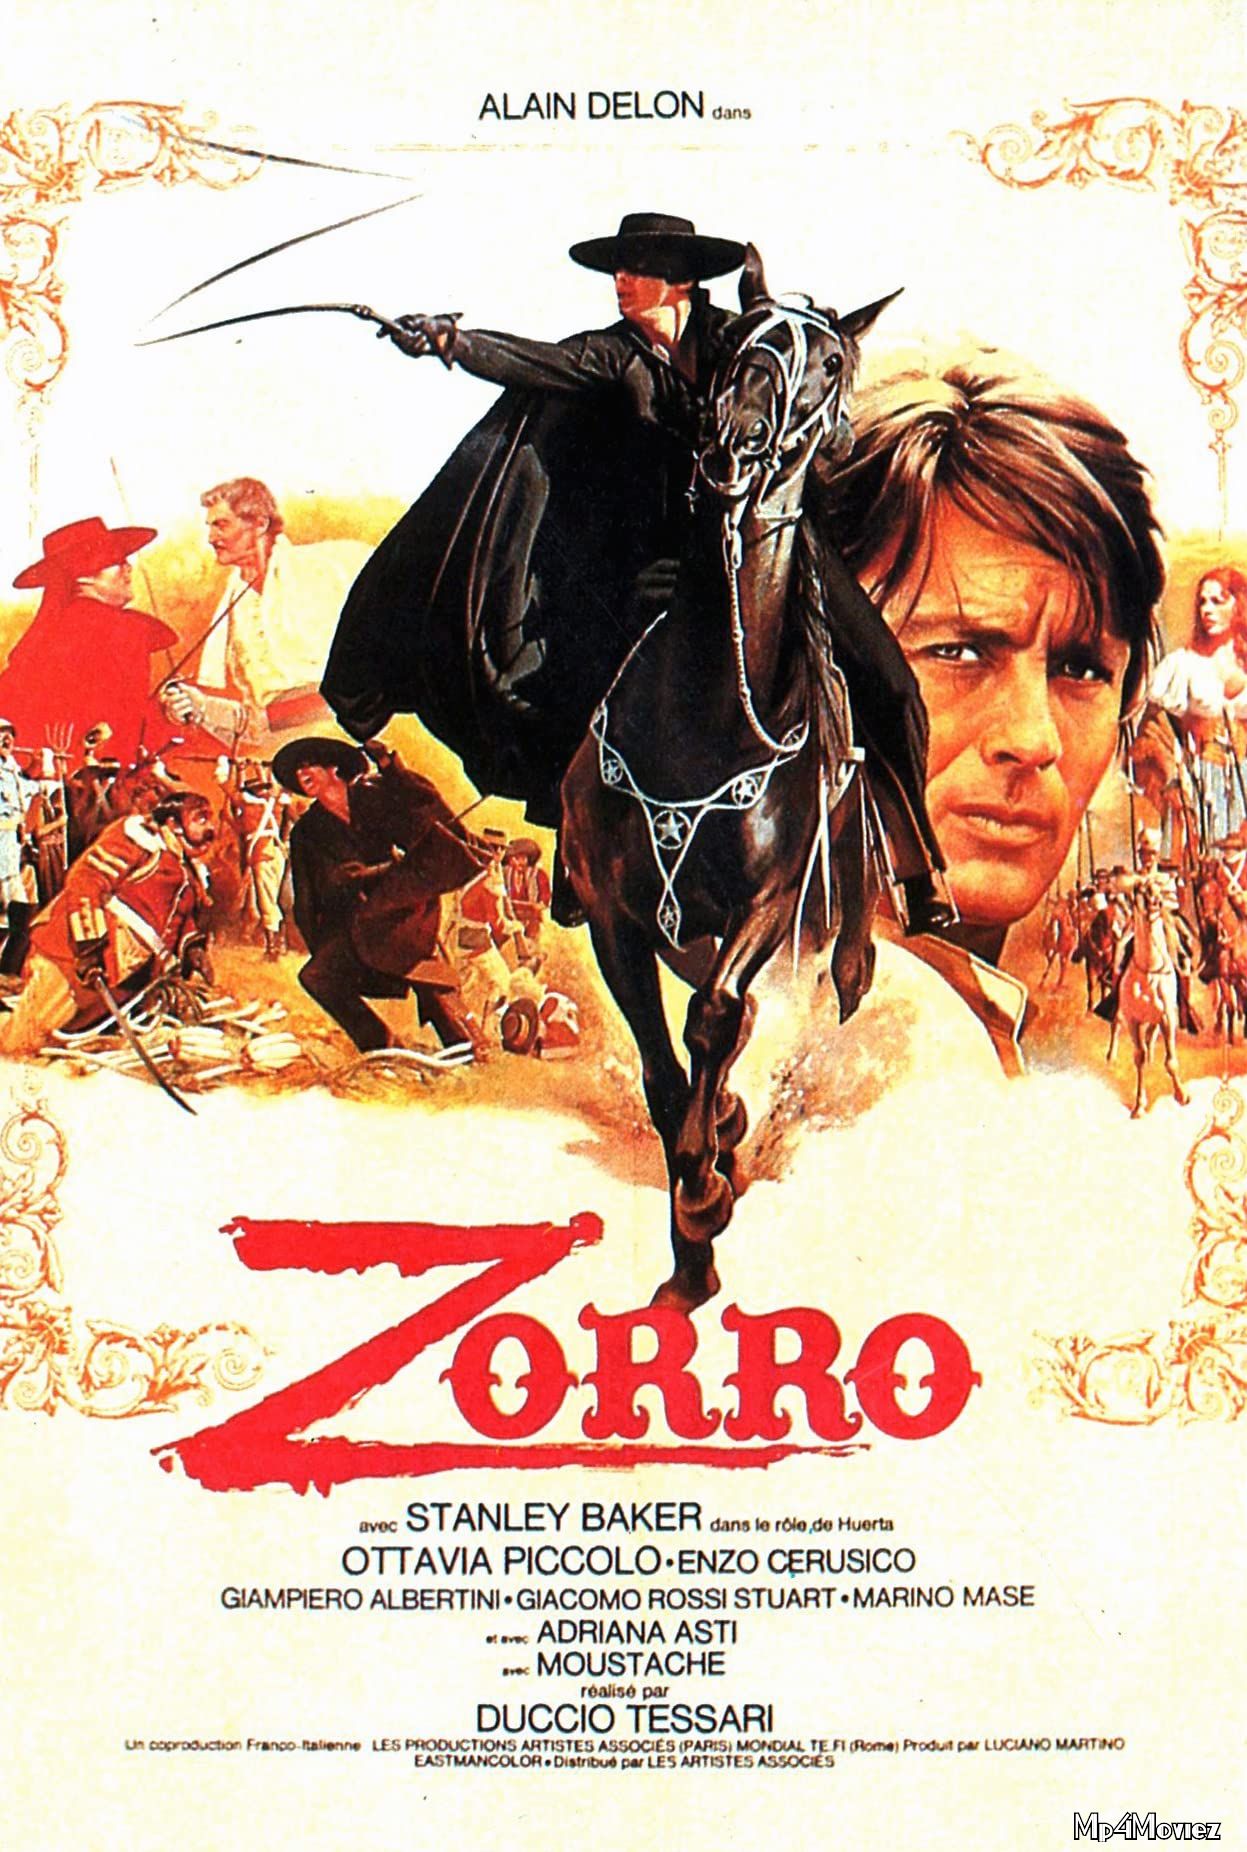 Zorro (1975) Hindi Dubbed BRRip download full movie